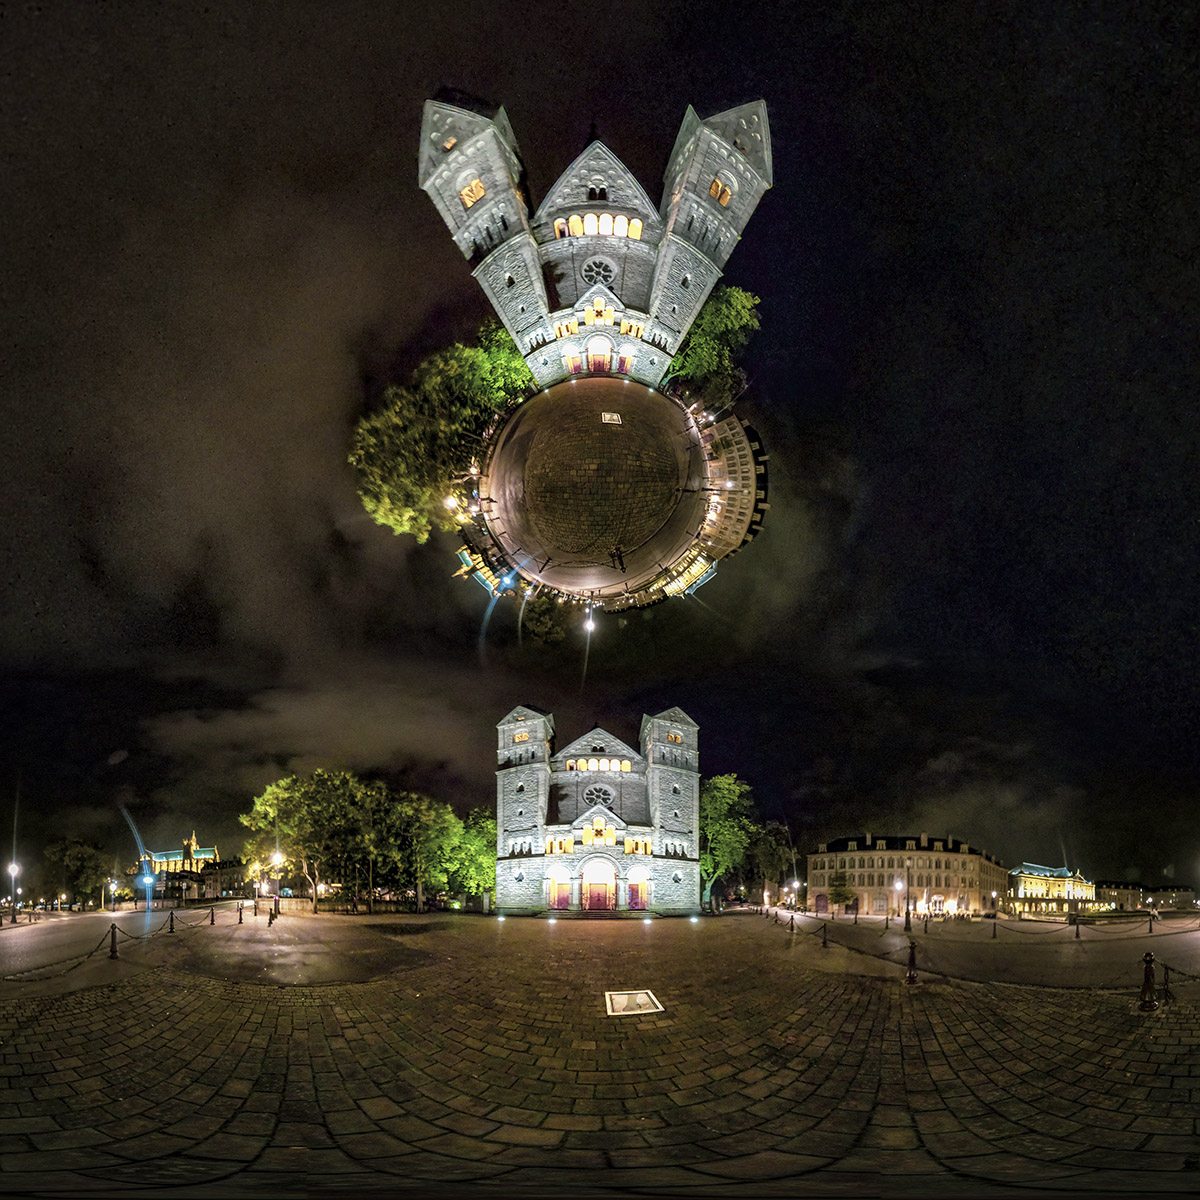 Temple neuf by night - 2022-10 - Florian Rudzinski